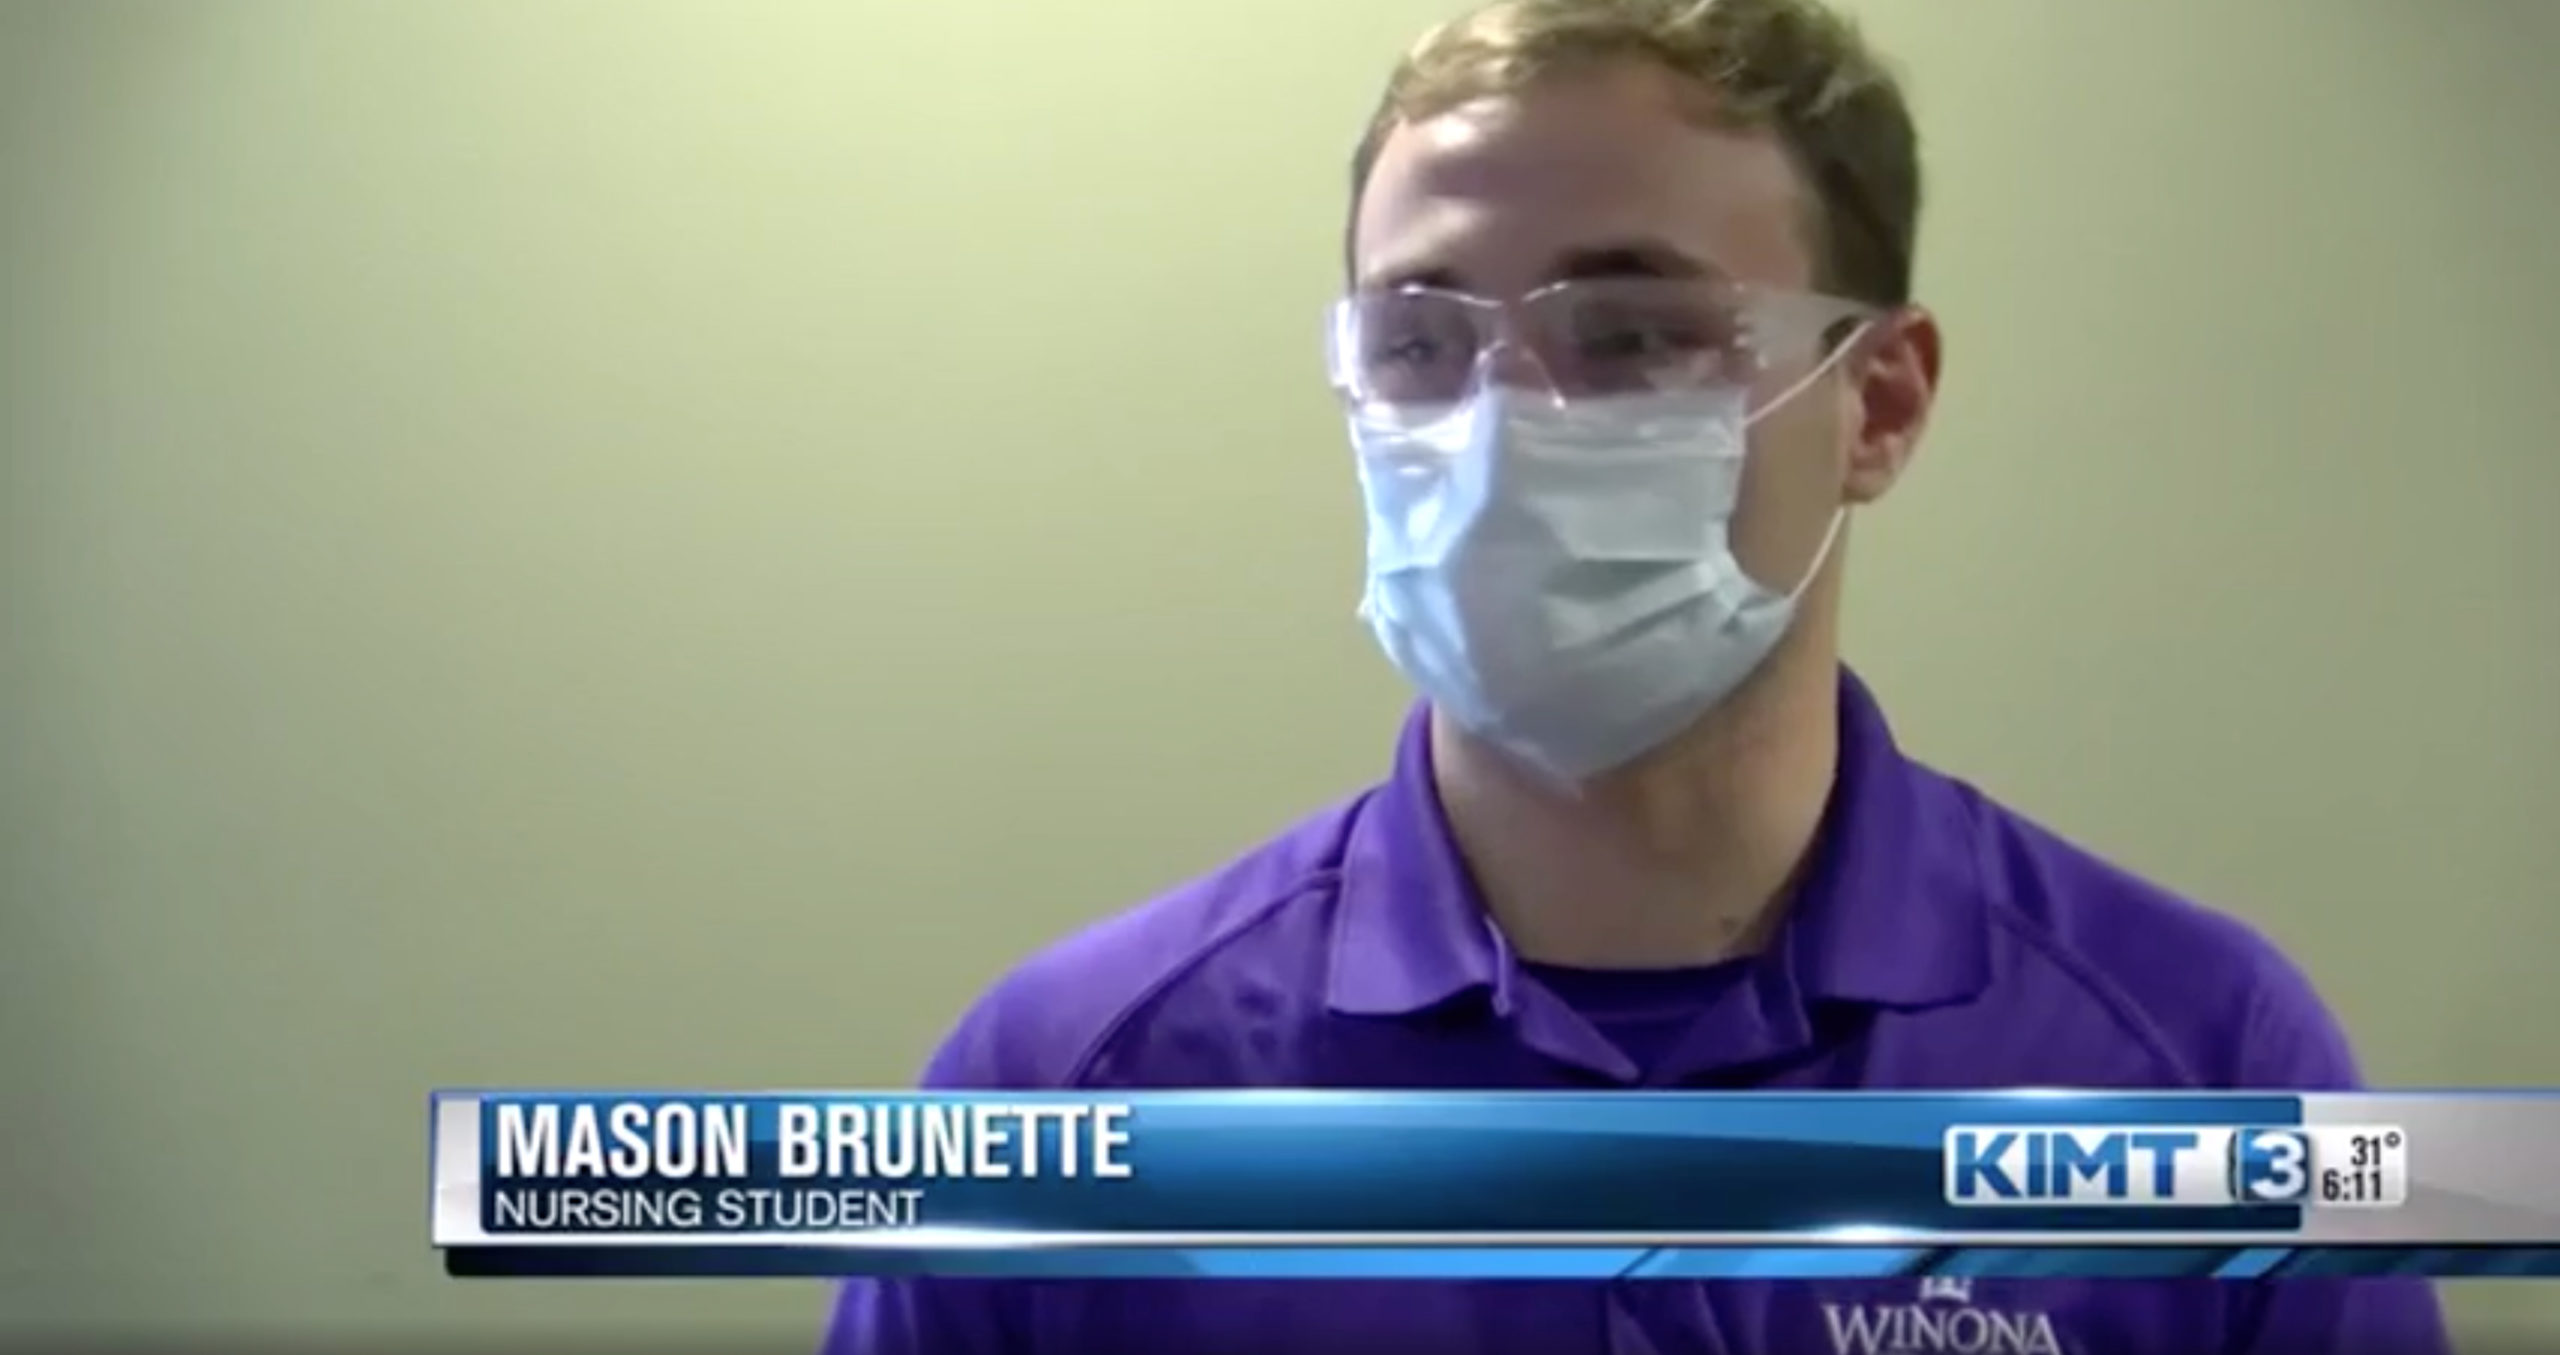 A screenshot from a KIMT News 3 interview with WSU nursing student Mason Brunette